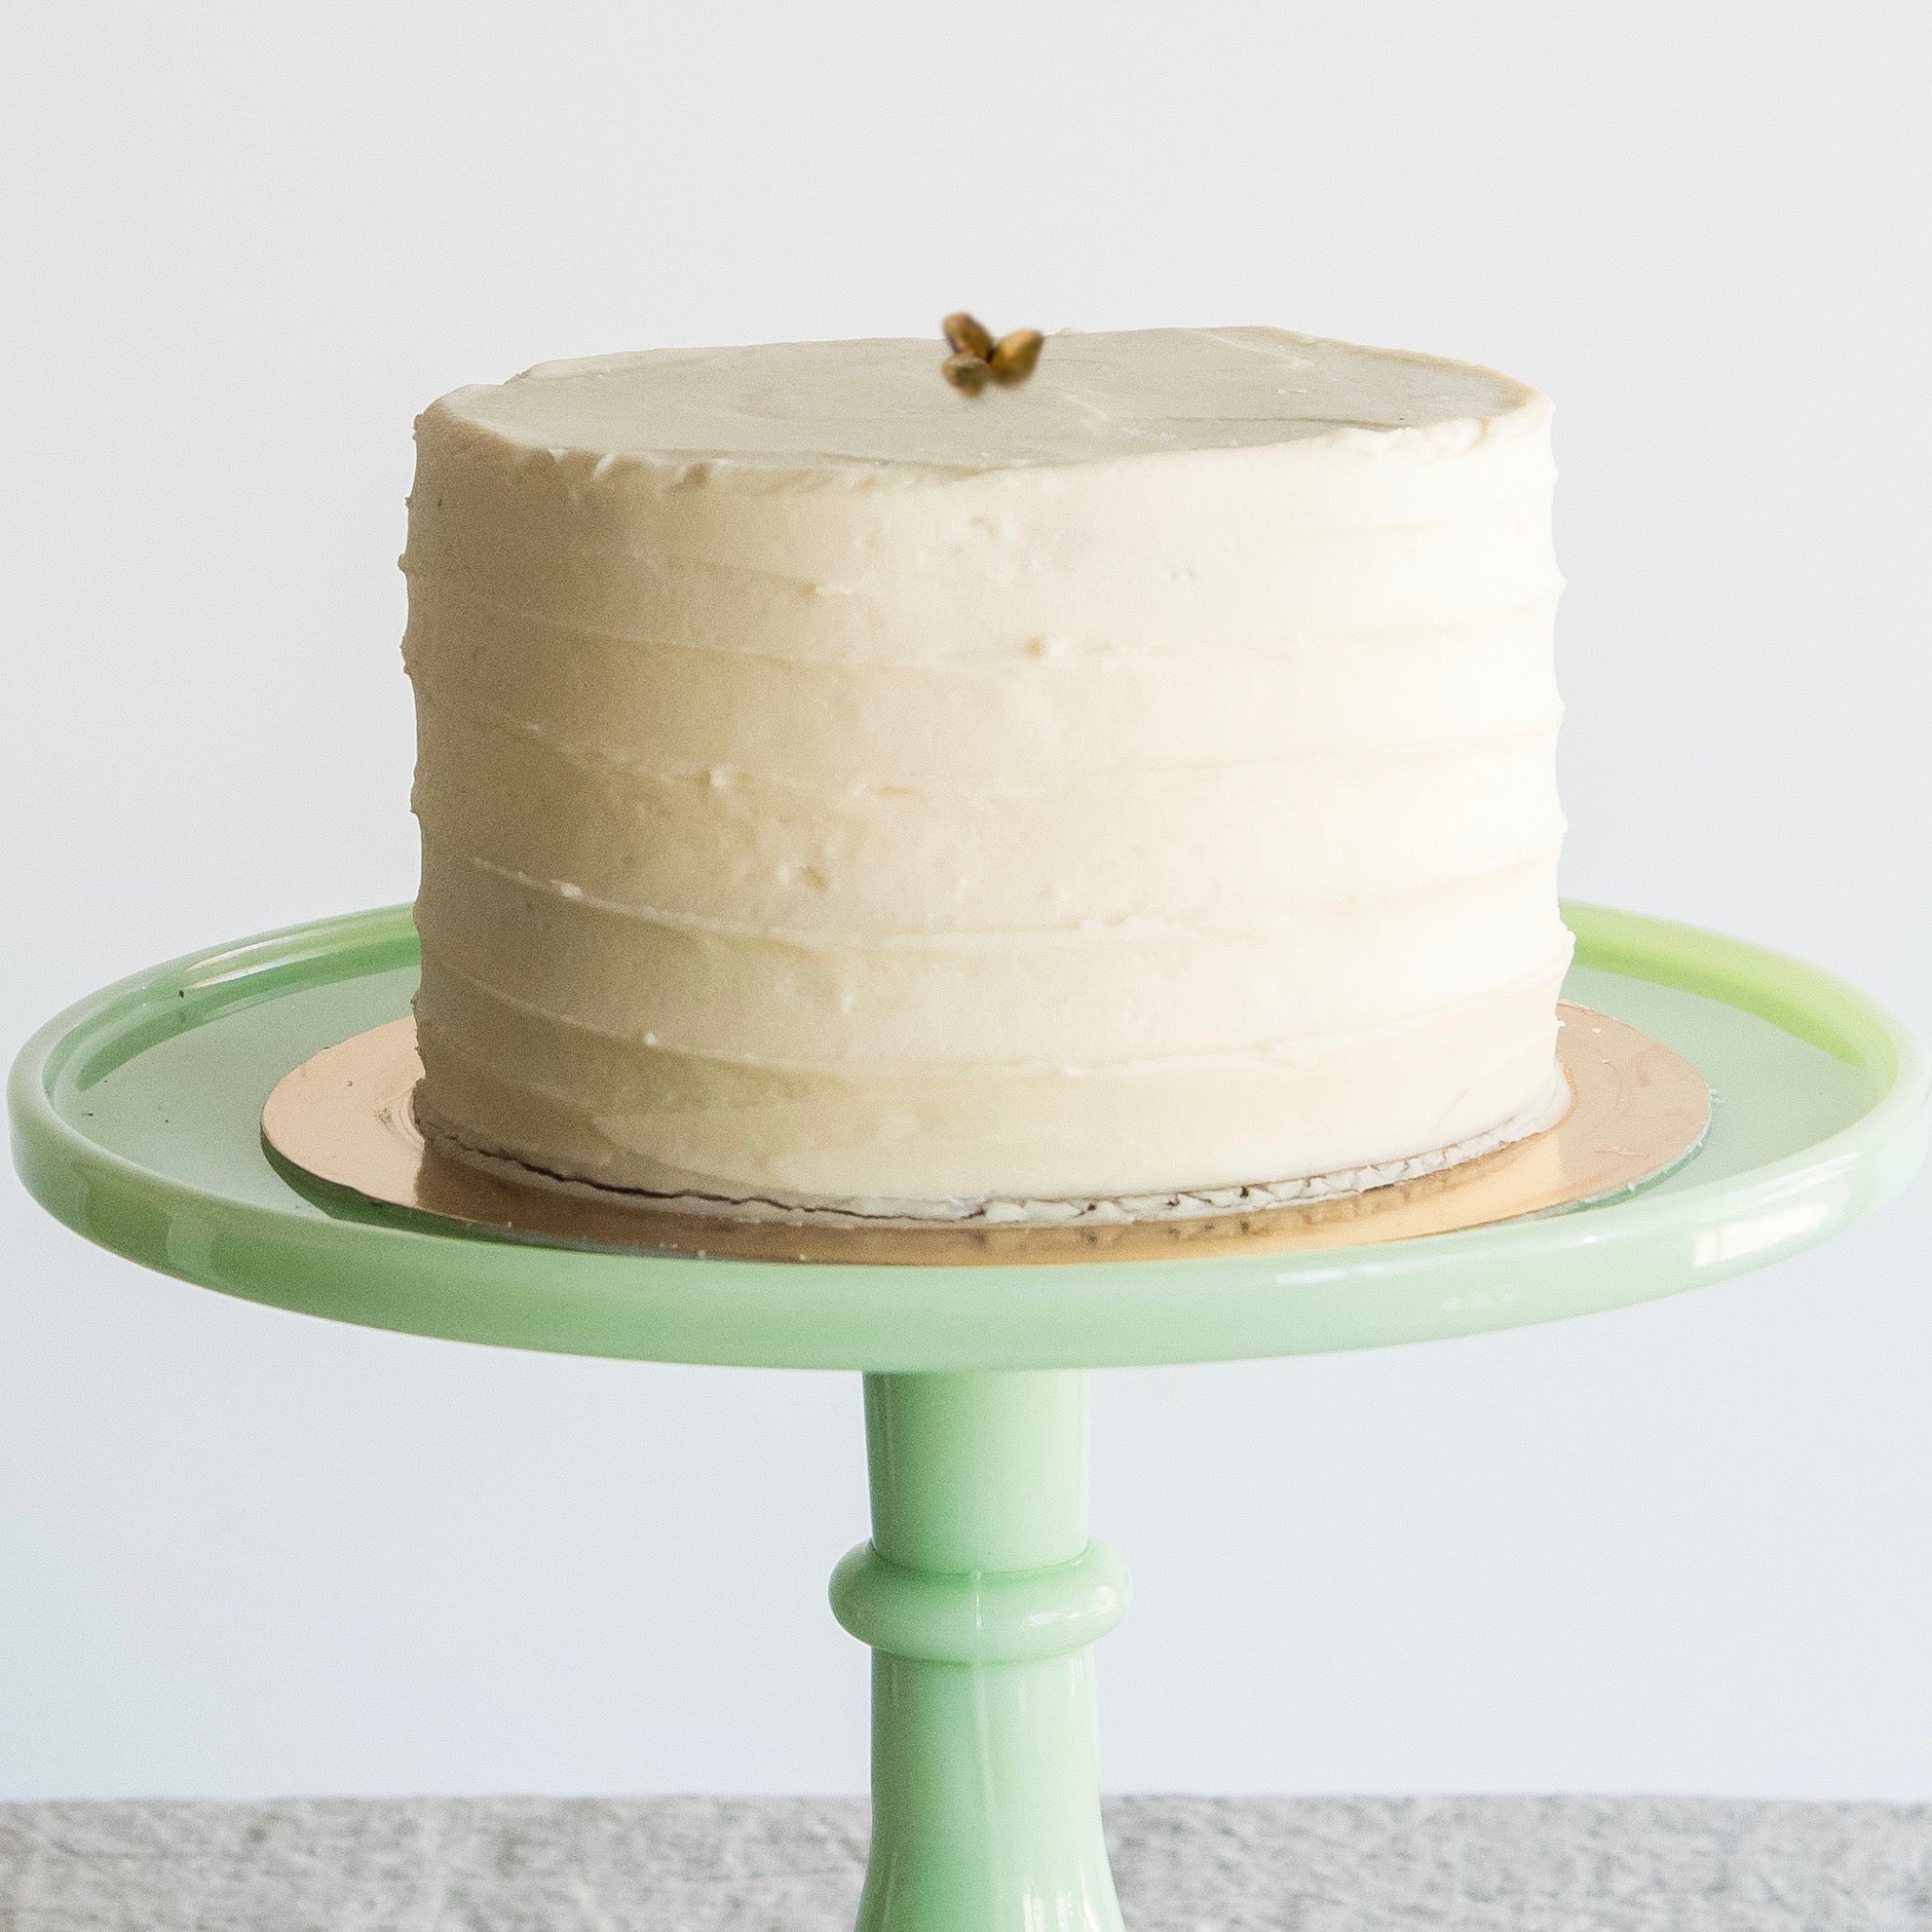 Pistachio cardamom cake + honey buttercream (gluten-free ingredients)